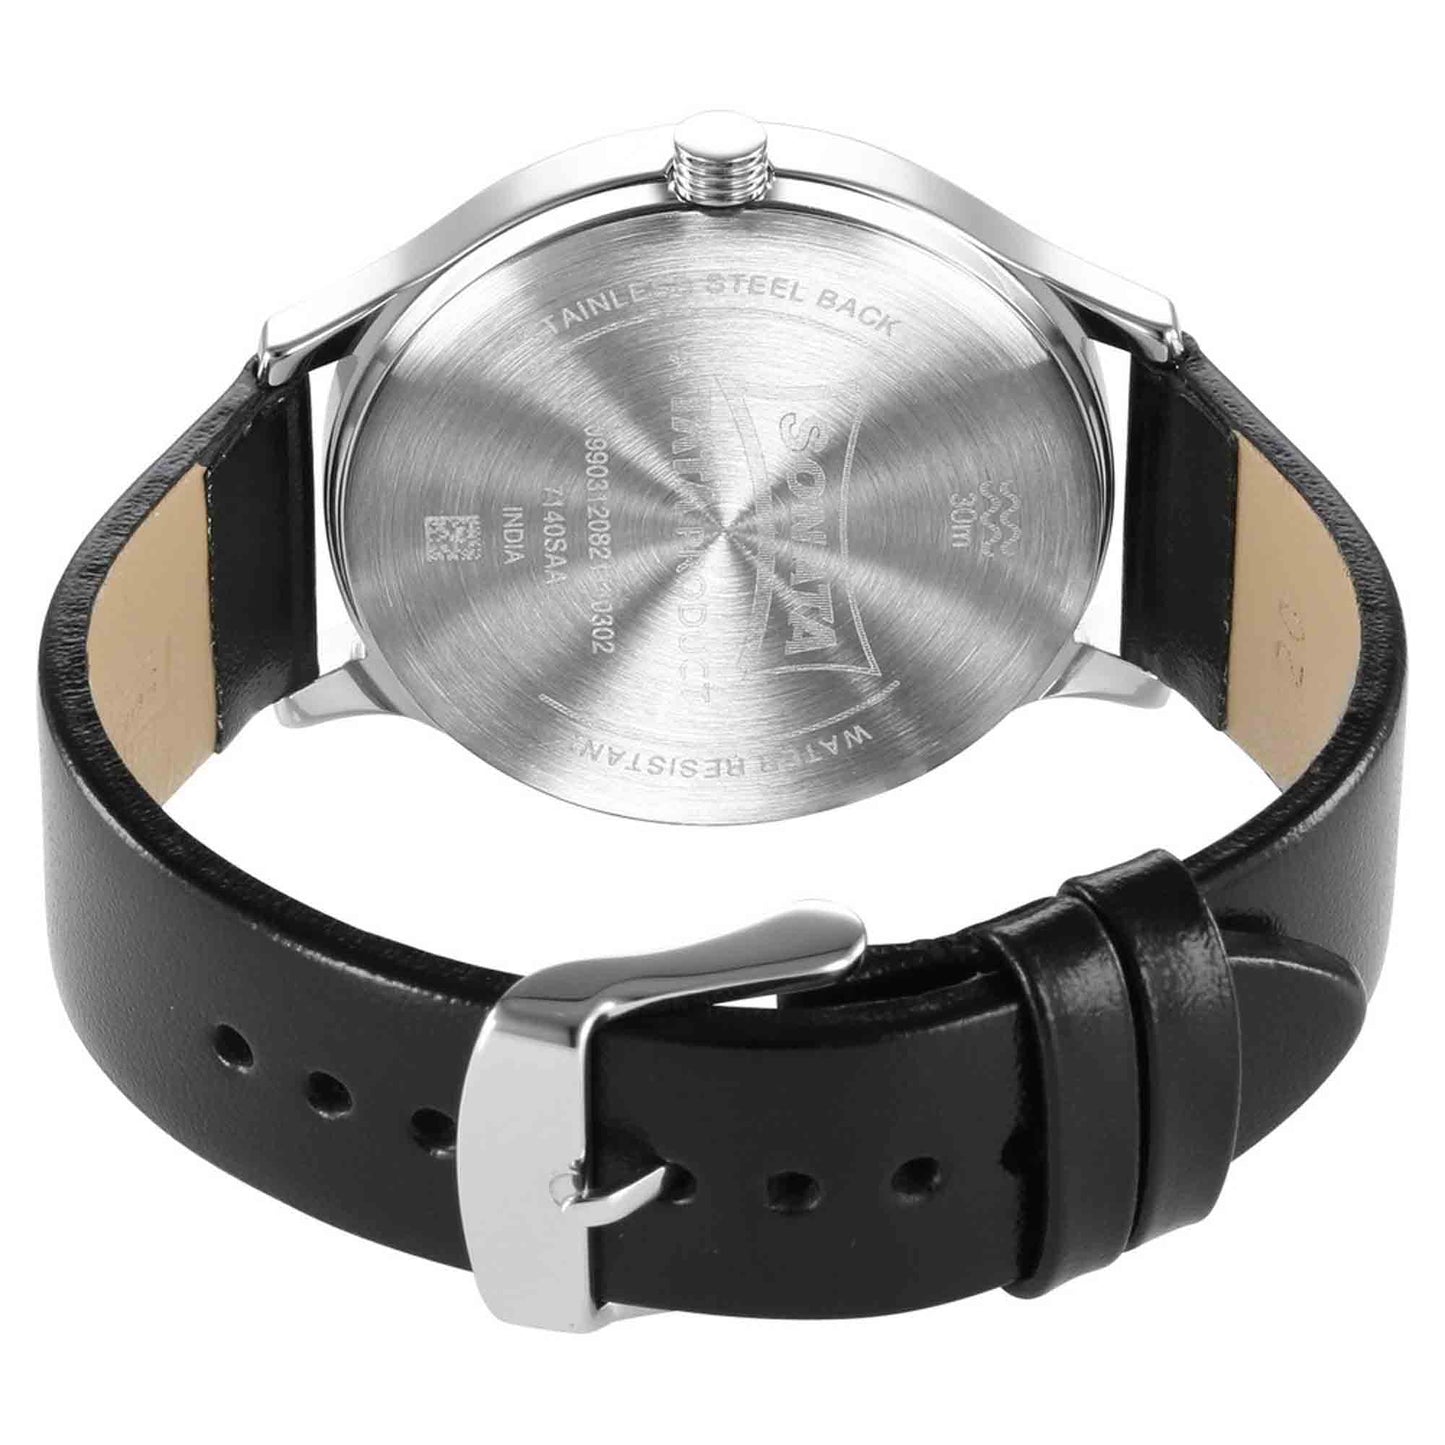 Sonata Quartz Multifunction Black Dial Leather Strap Watch for Men